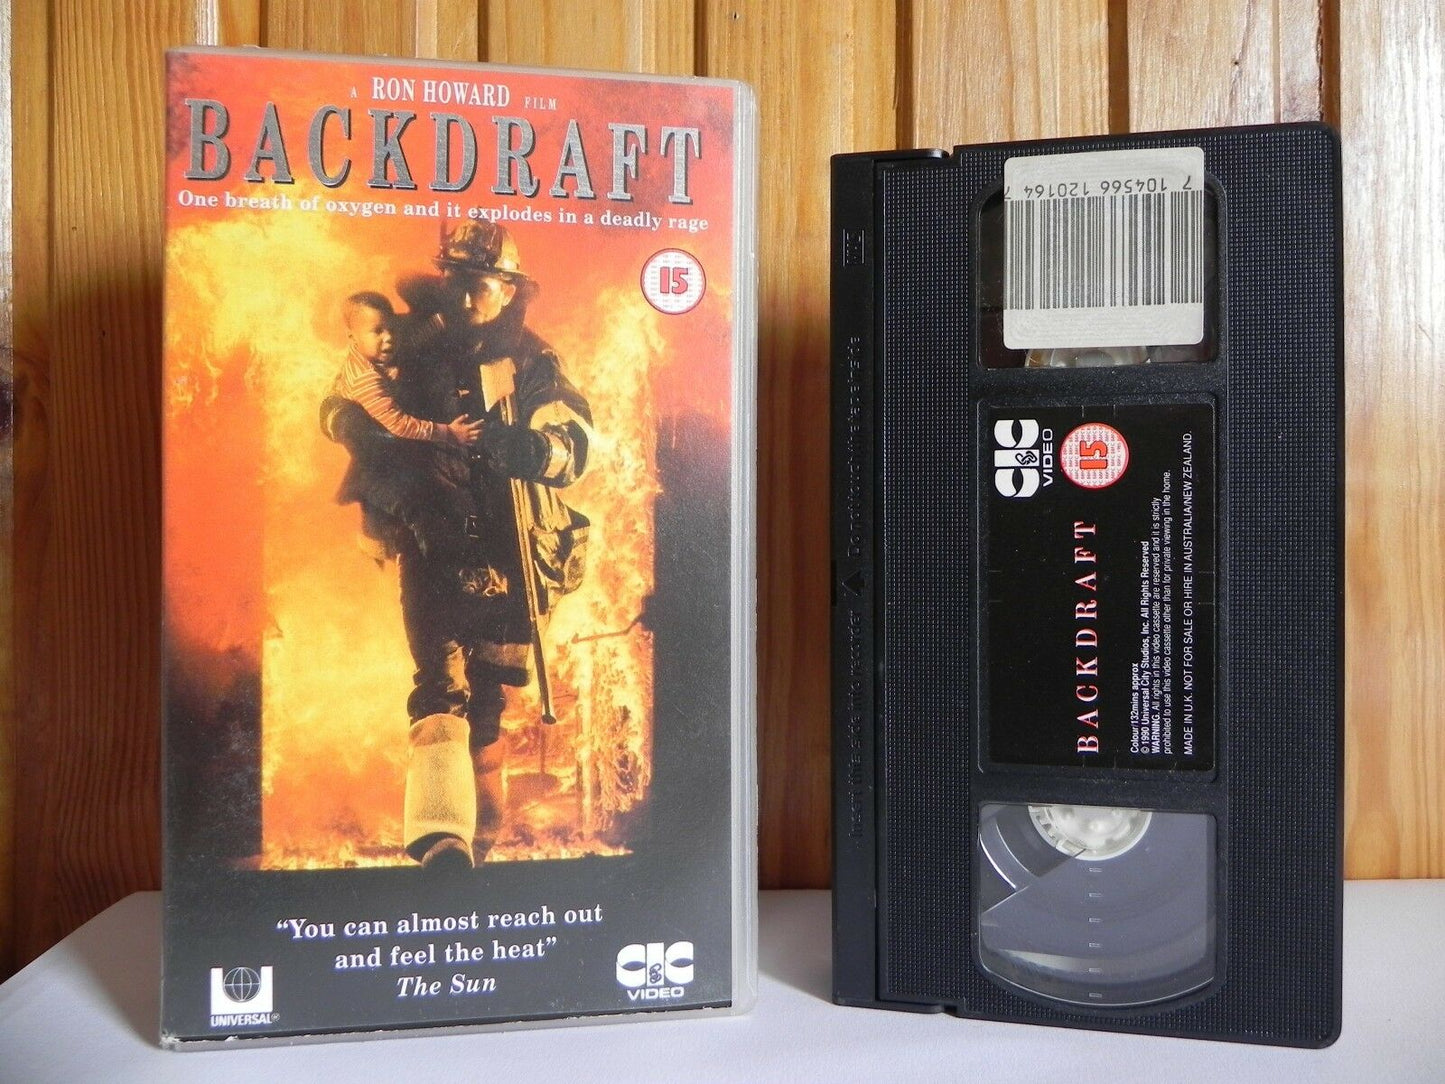 Blackdraft; [Ron Howard] - Disaster Drama - Kurt Russell / Robert De Niro - VHS-